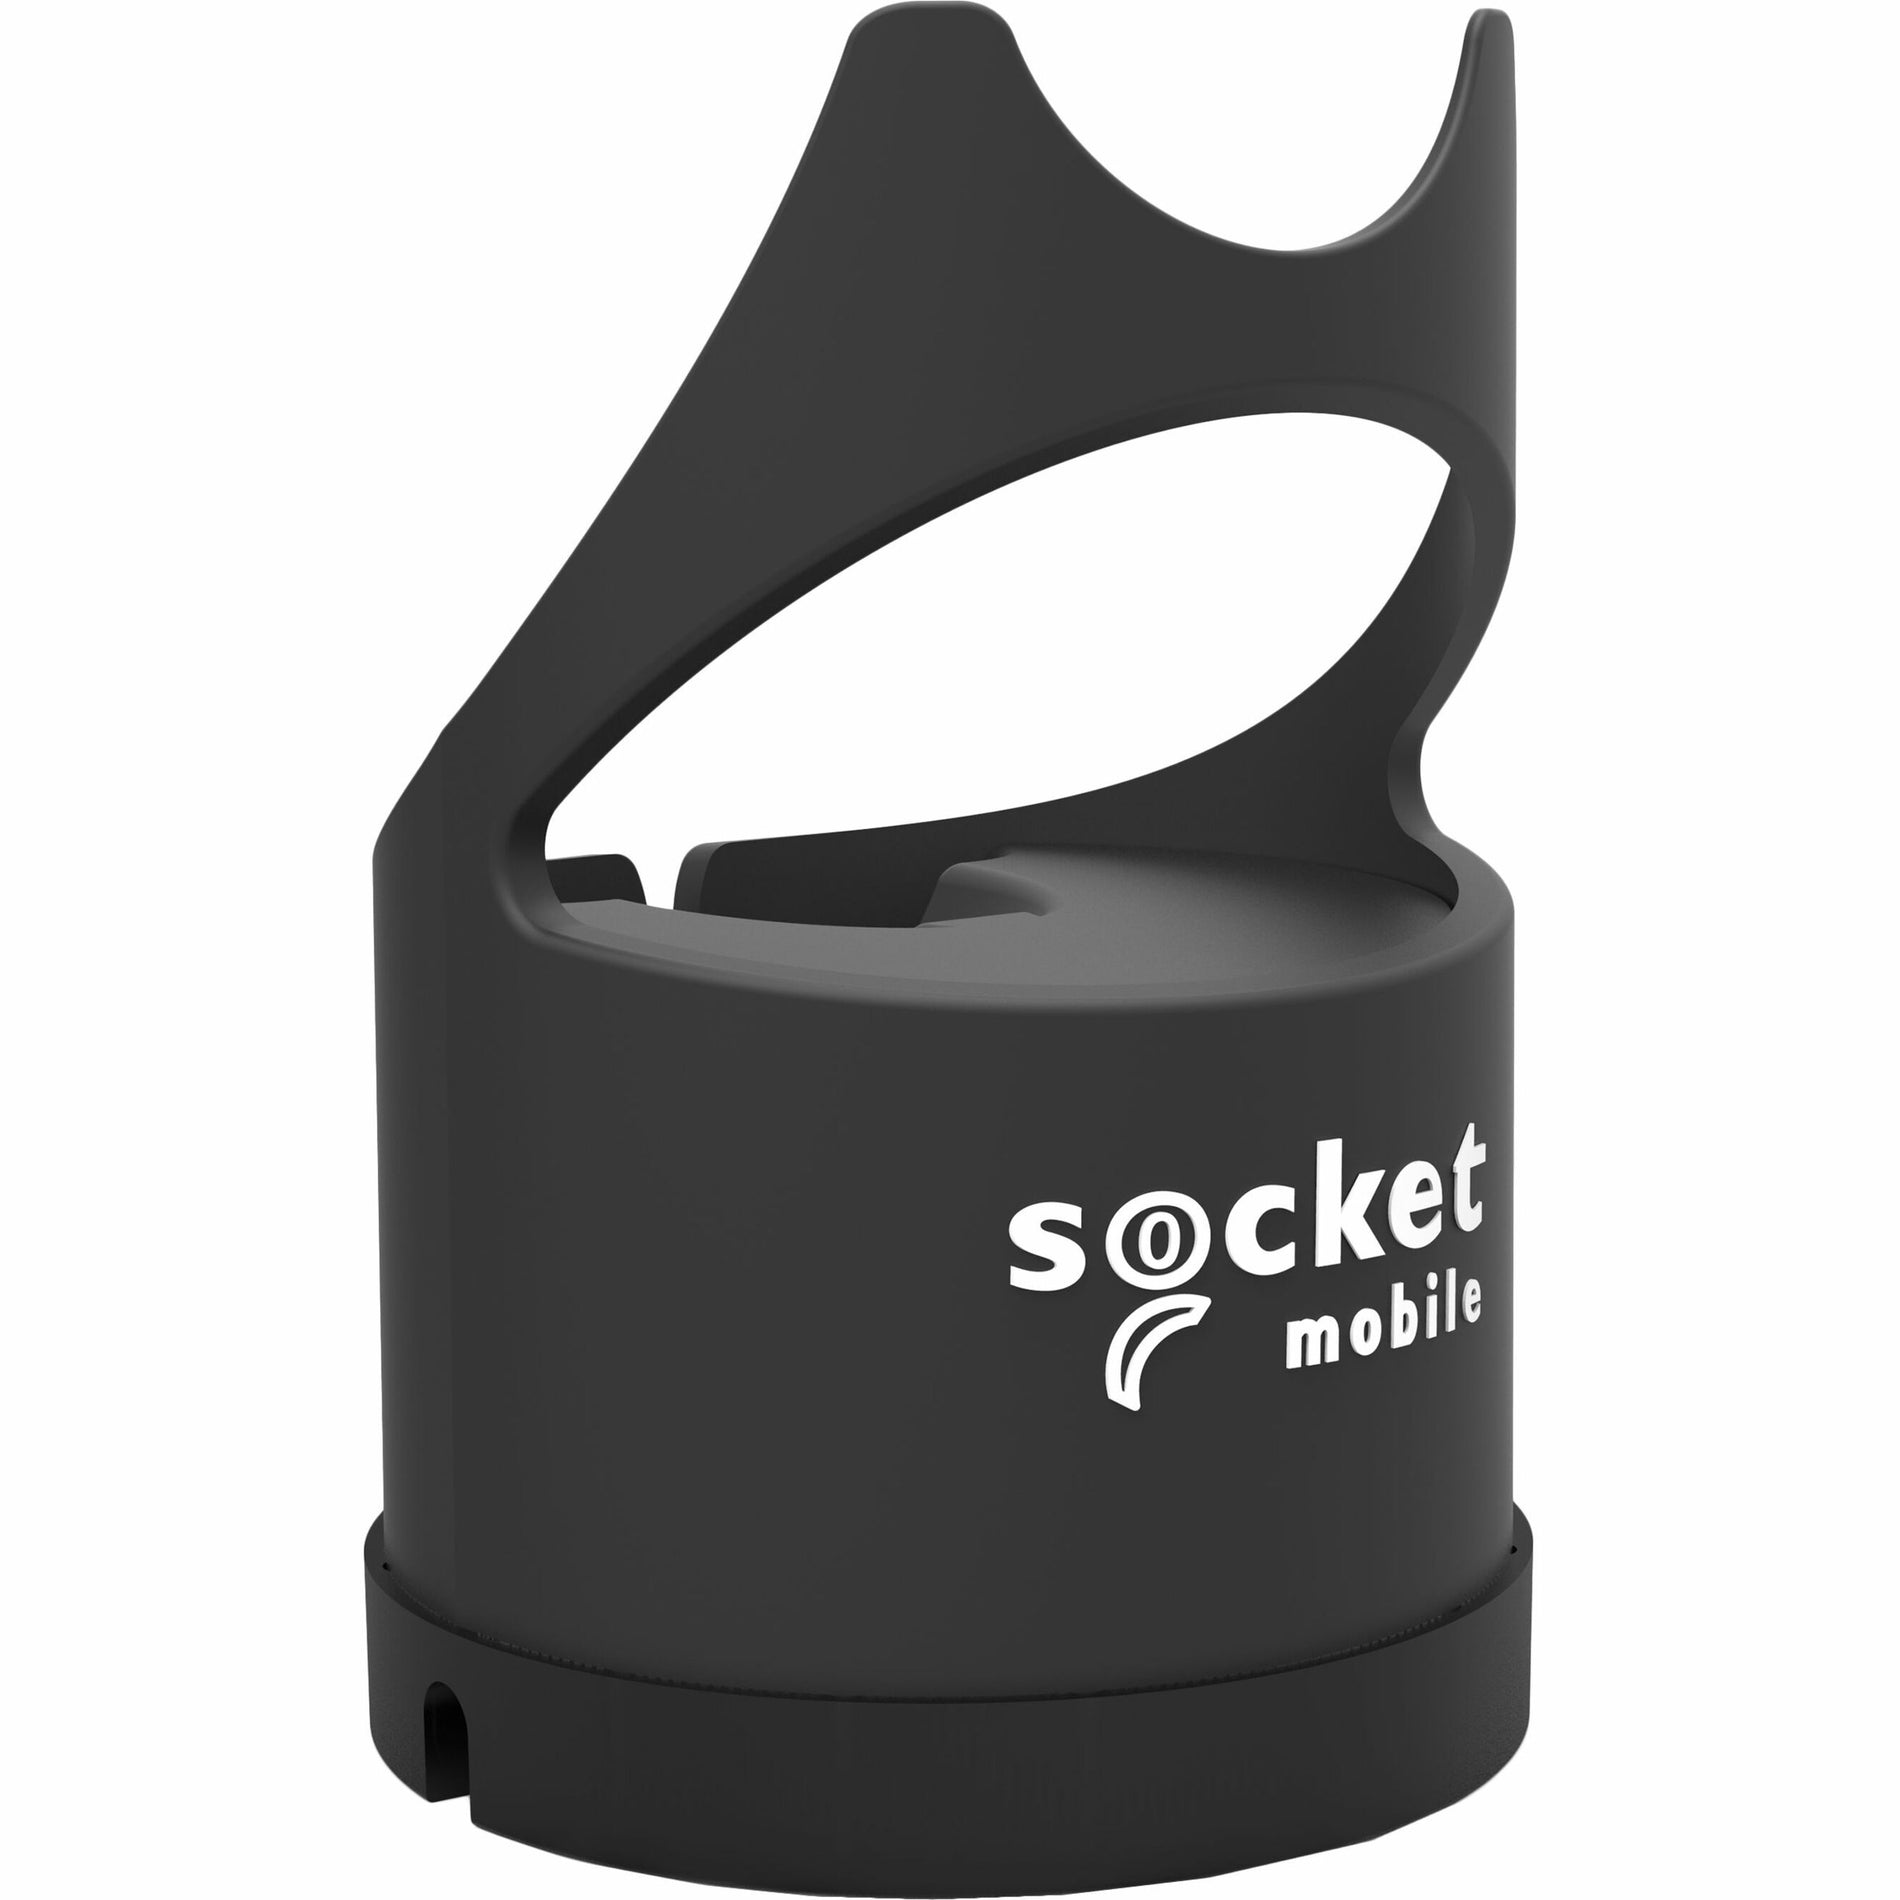 Socket Mobile CX3987-3044 SocketScan S720 Barcode Scanner Kit, Red & Black Dock, Wireless, 2D & 1D Scanning